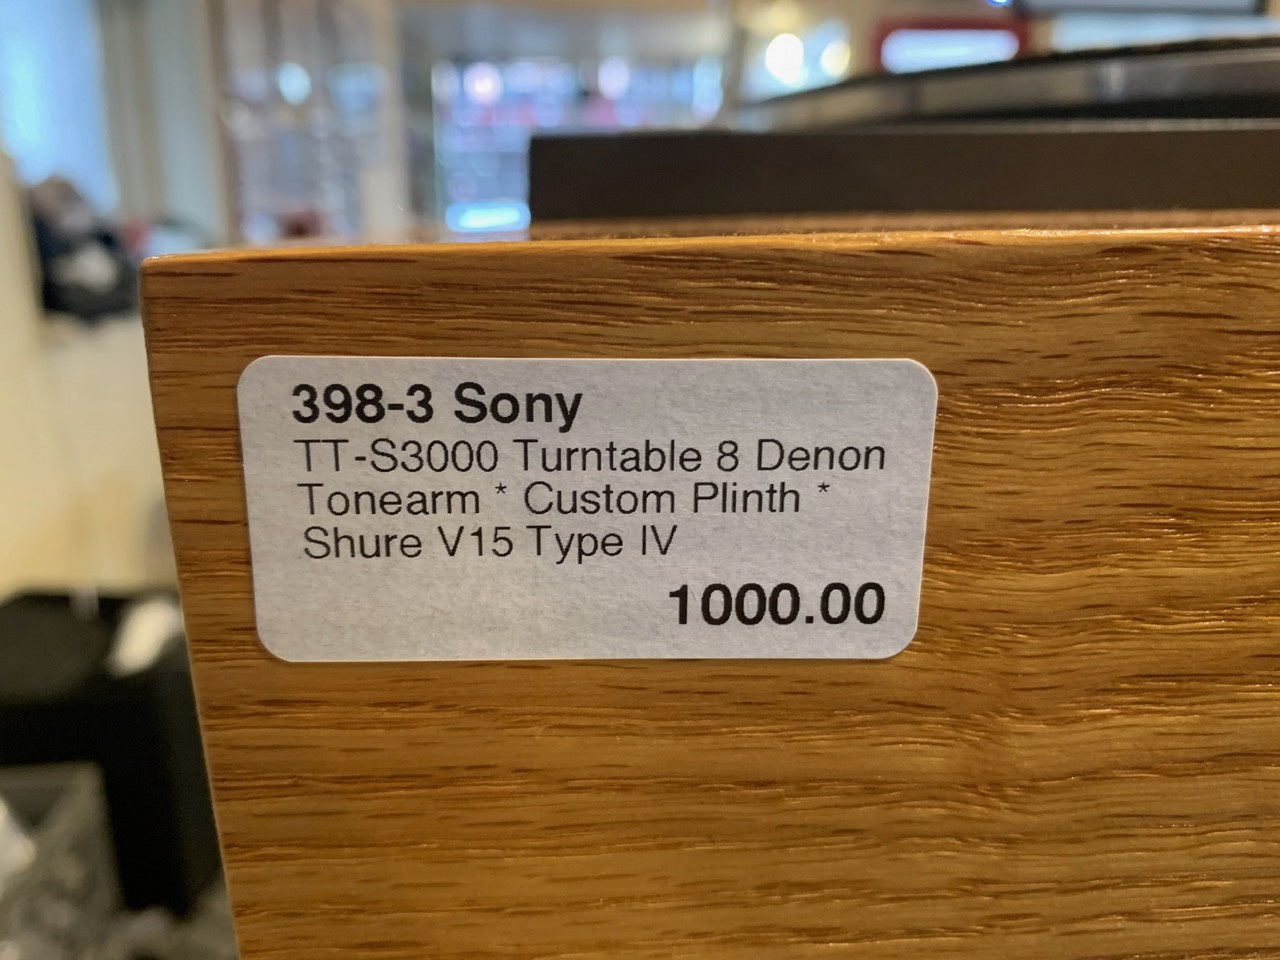 Sony TT-S3000 Turntable * Denon Tonearm * Custom Solid Wood Plinth * Shure V15 IV Cartridge